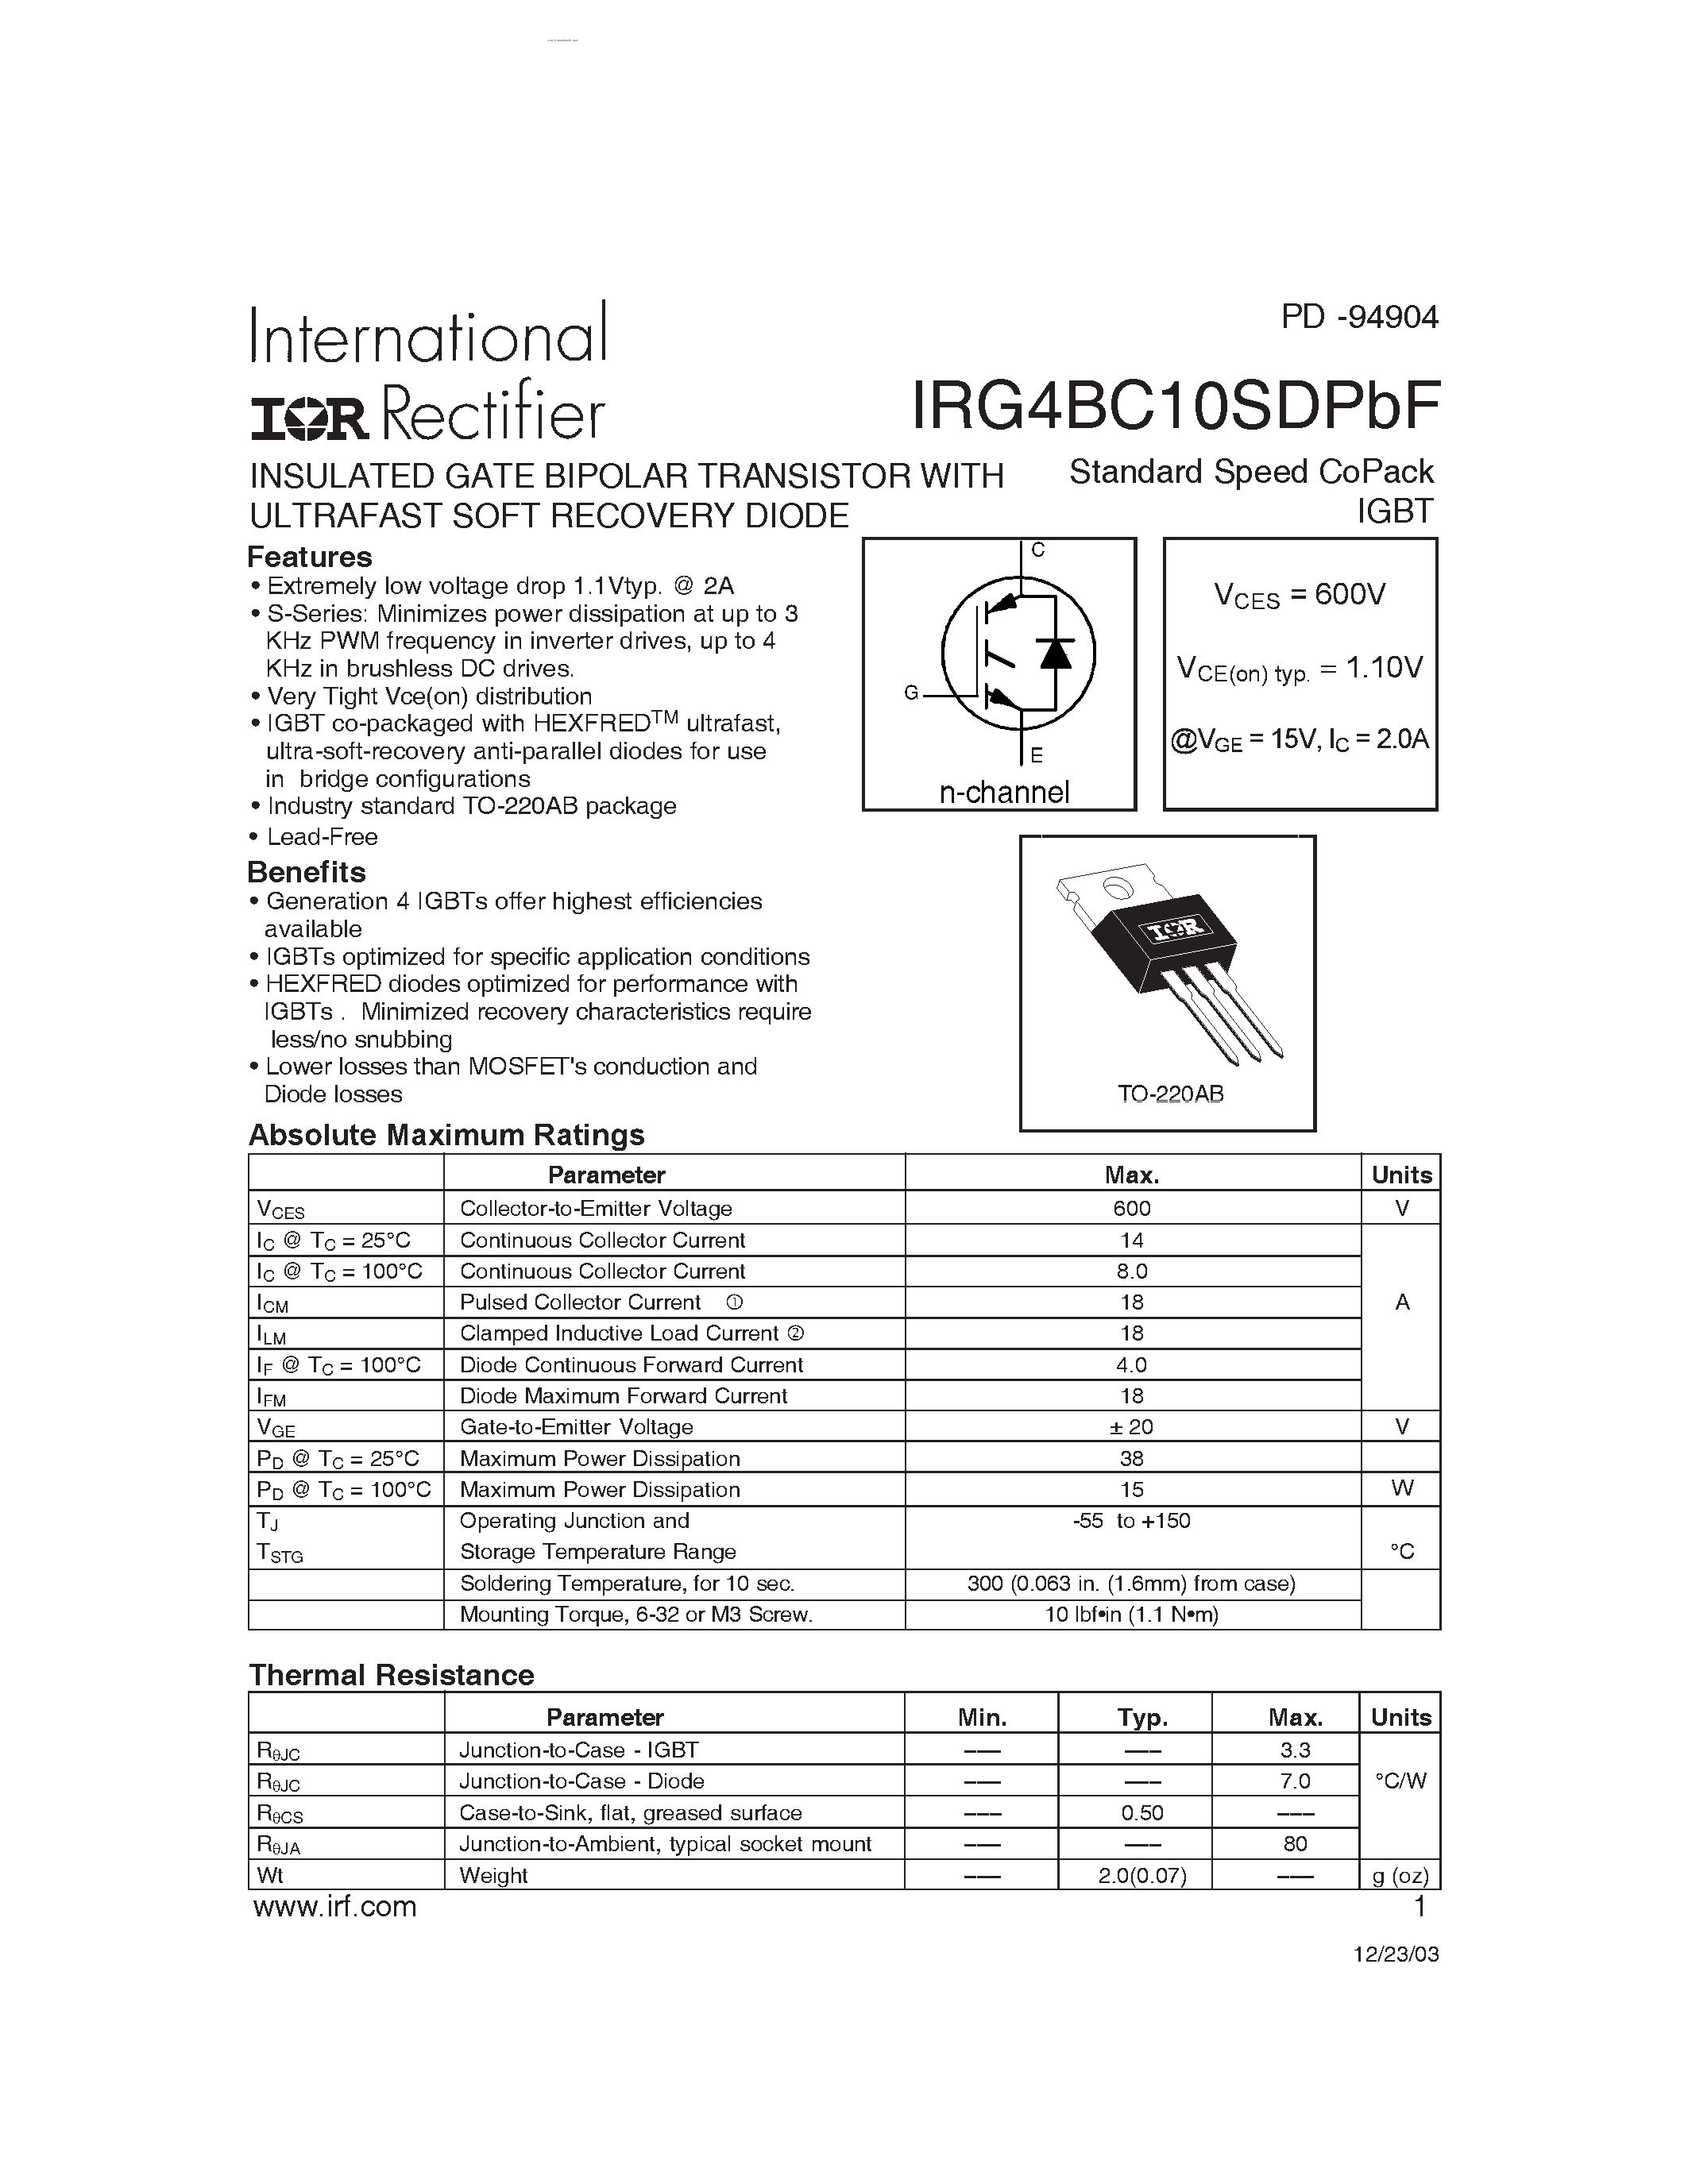 Datasheet IRG4BC10SDPBF - INSULATED GATE BIPOLAR TRANSISTOR page 1